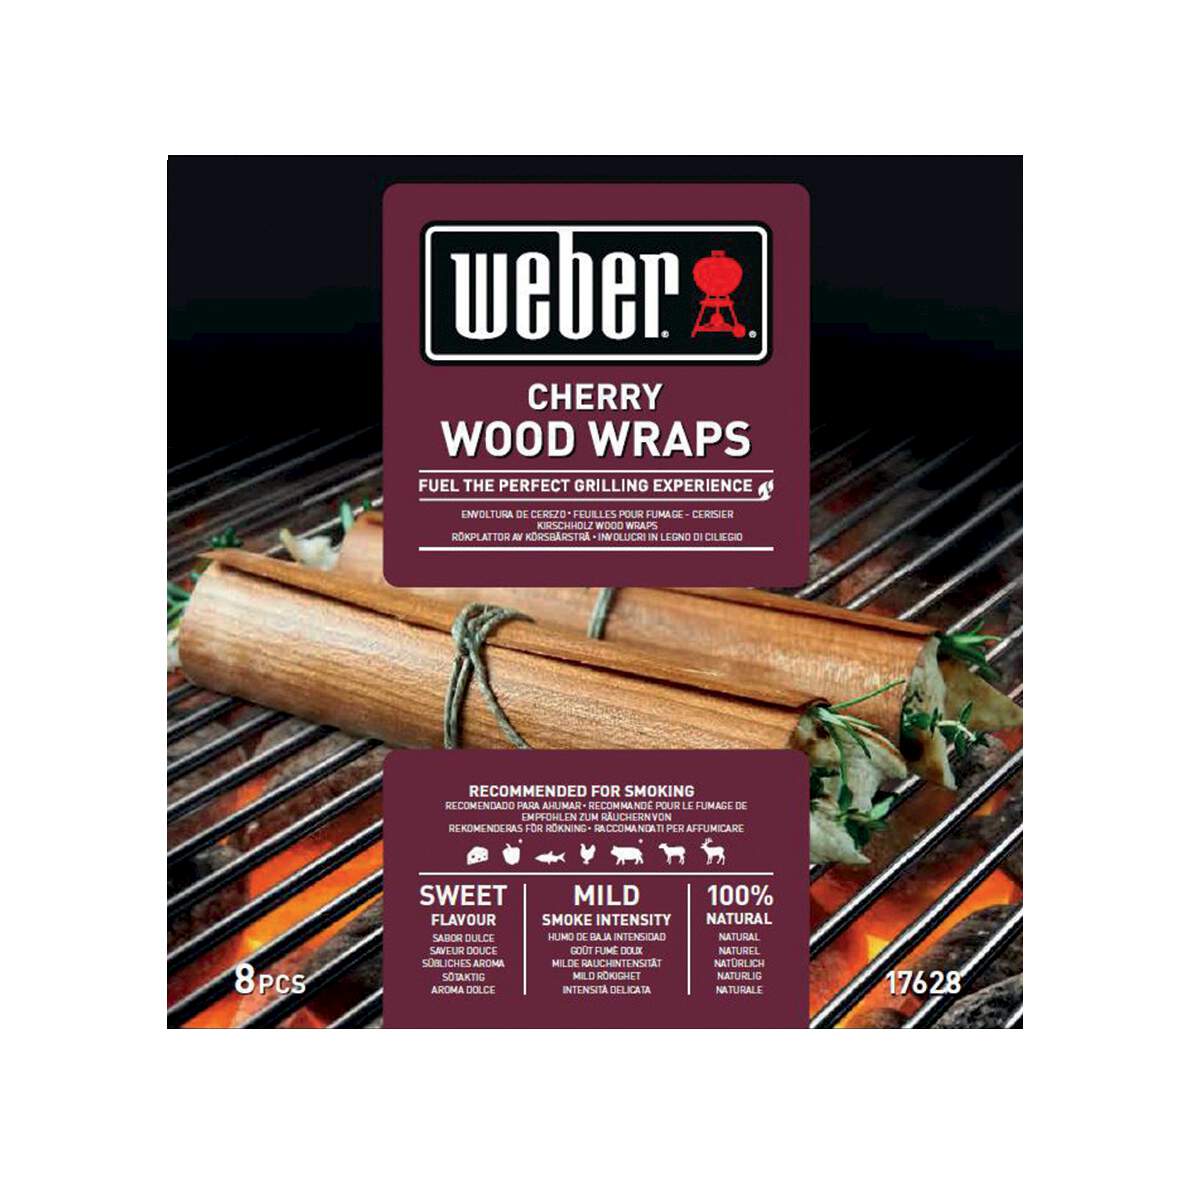 1239549 - Wood Wraps aus Kirschholz 8 Stk.